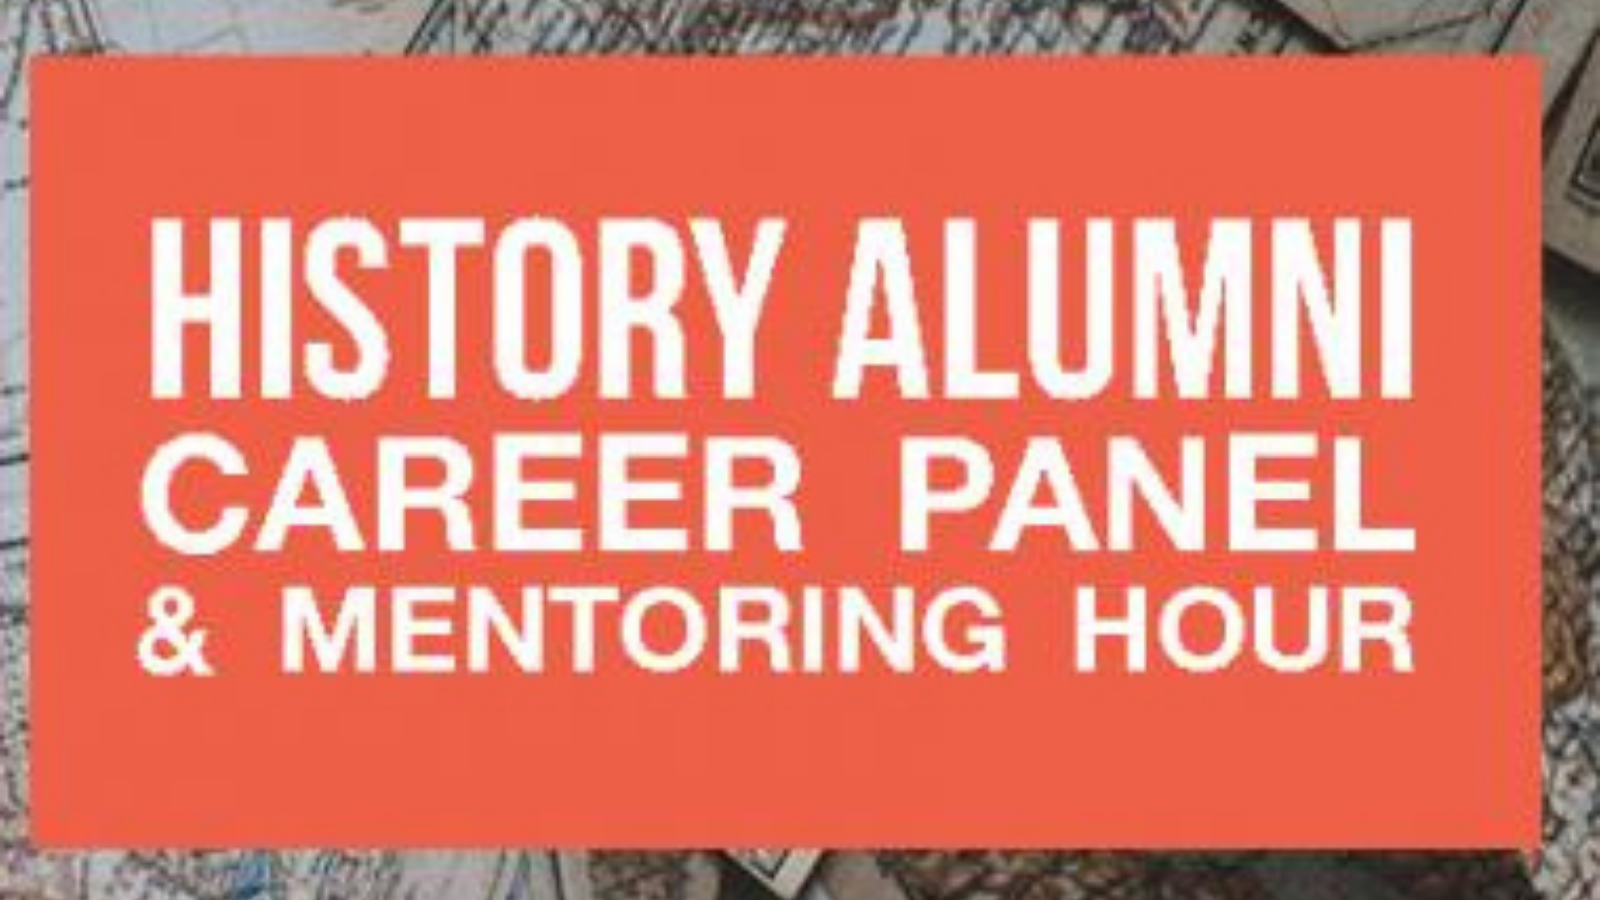 History Alumni Career Panel & Mentoring Hour inset